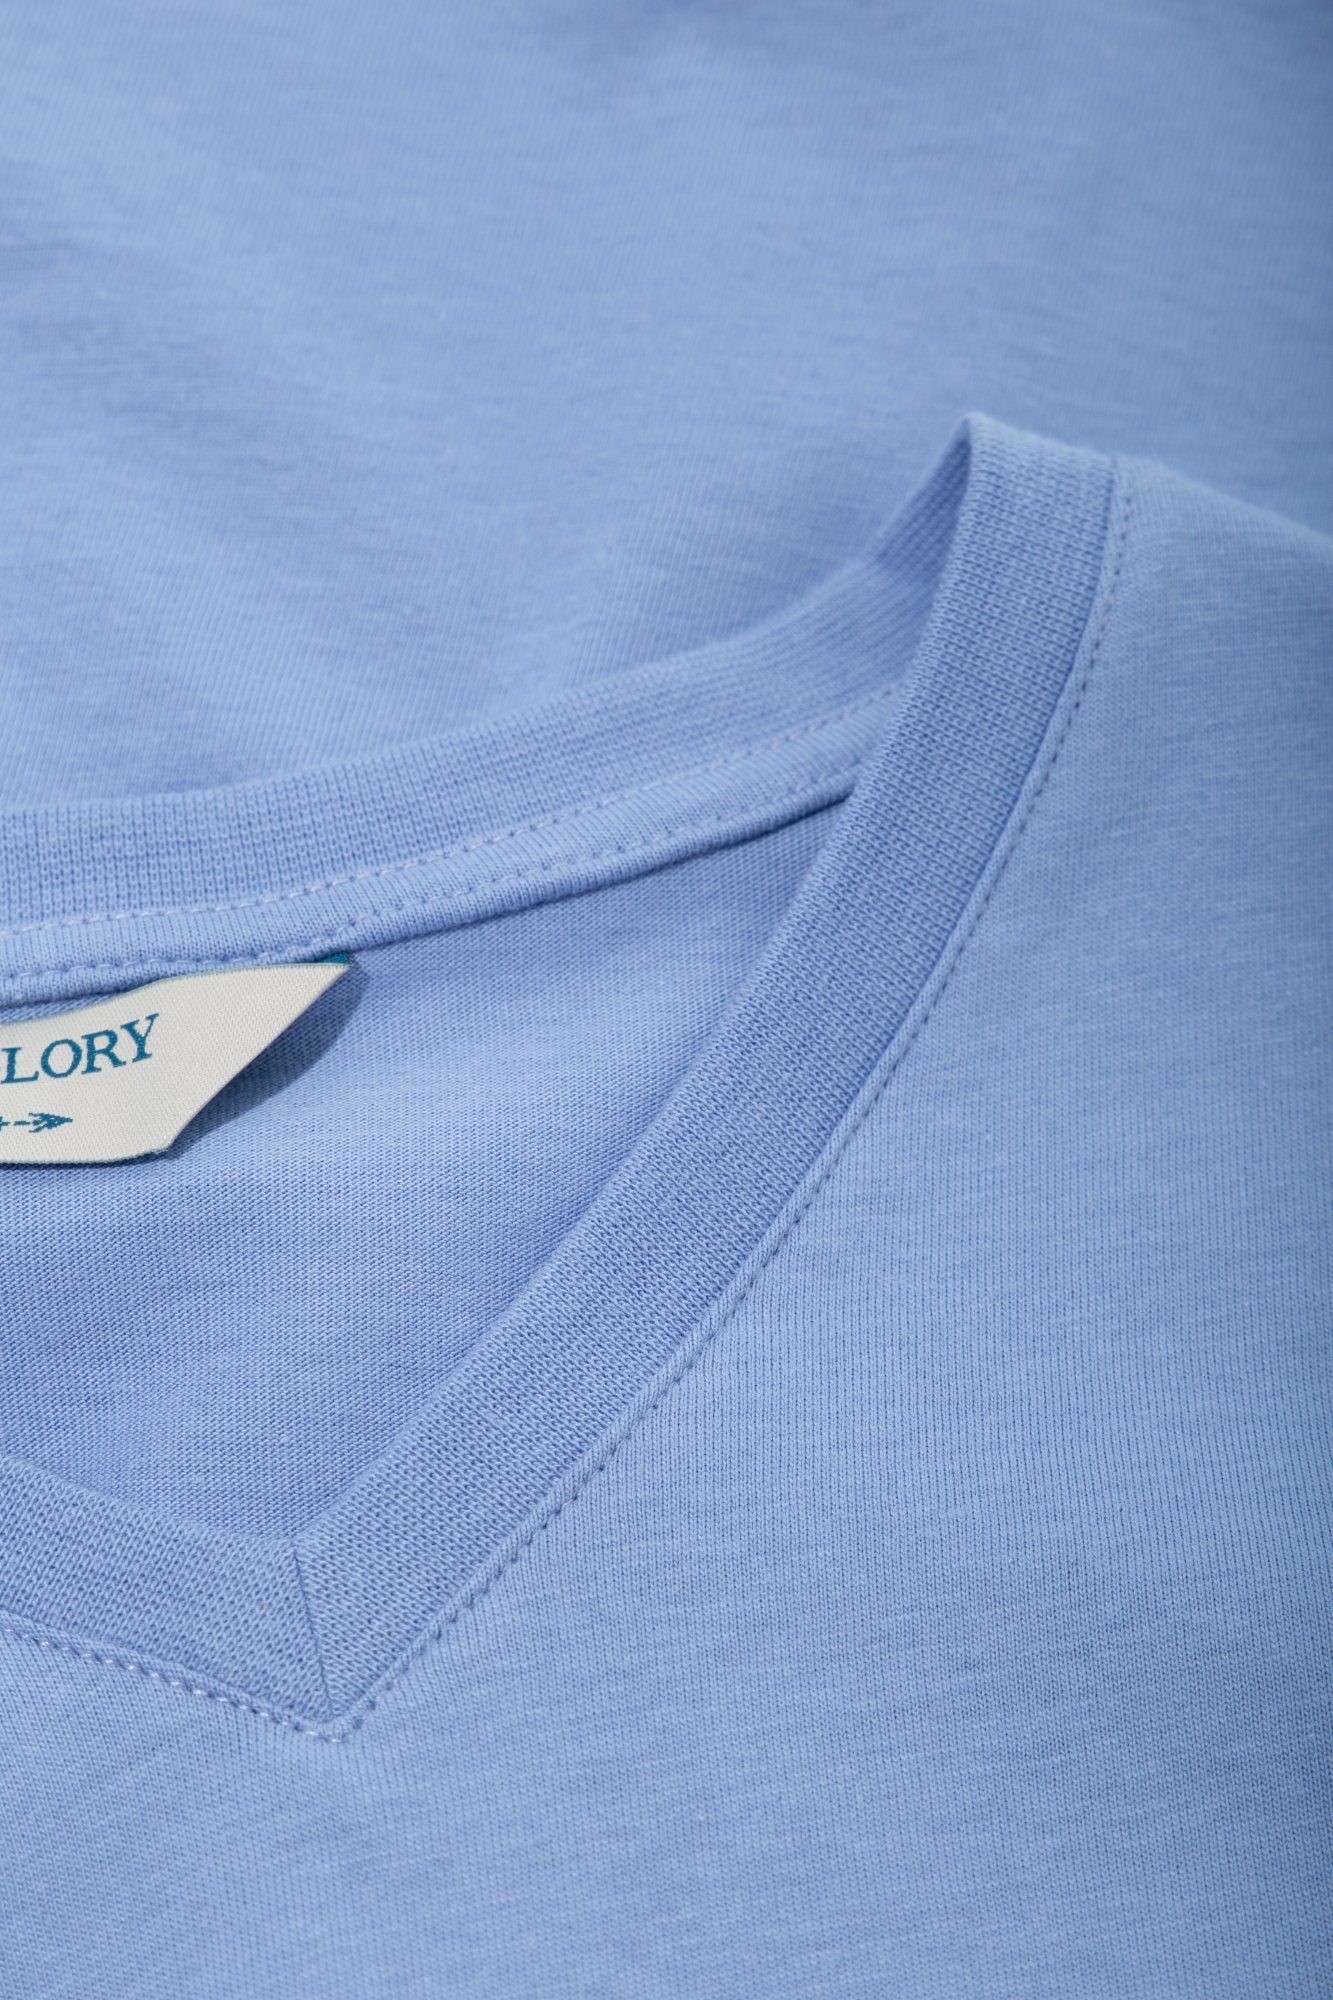 Way of Glory T-Shirt mit hellblau V-Ausschnitt